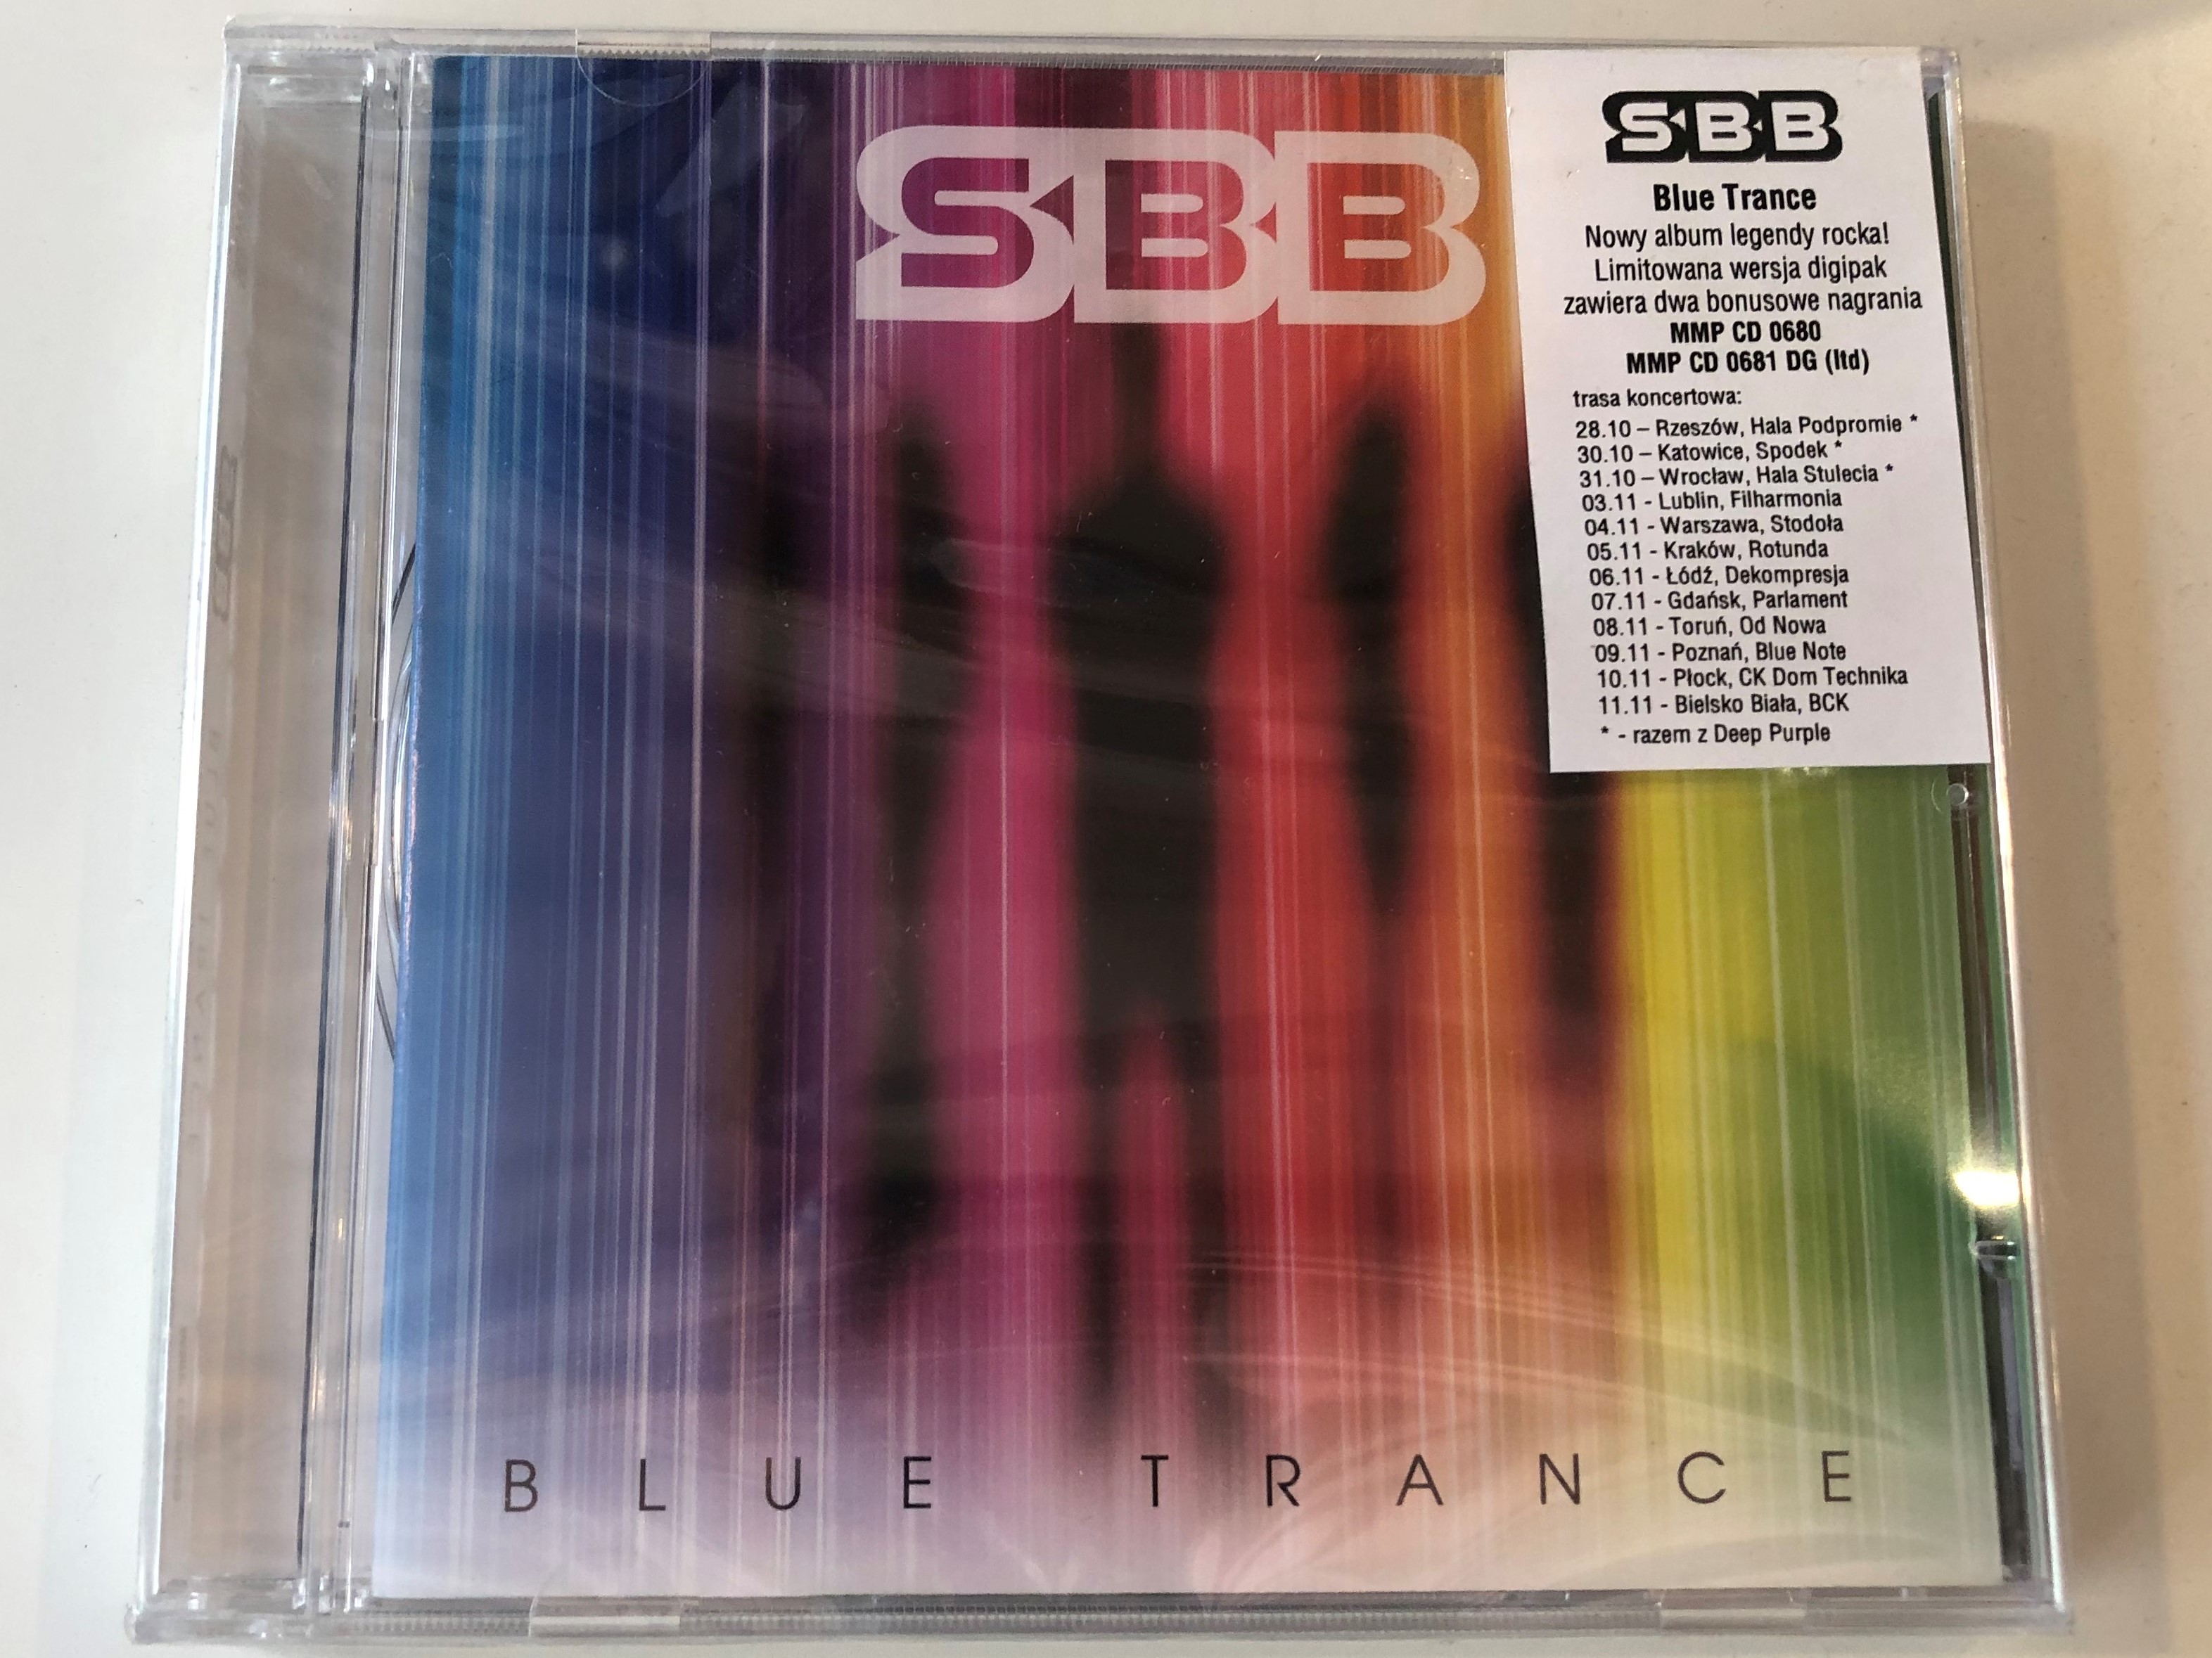 sbb-blue-trance-metal-mind-productions-audio-cd-2010-mmp-cd-0680-1-.jpg